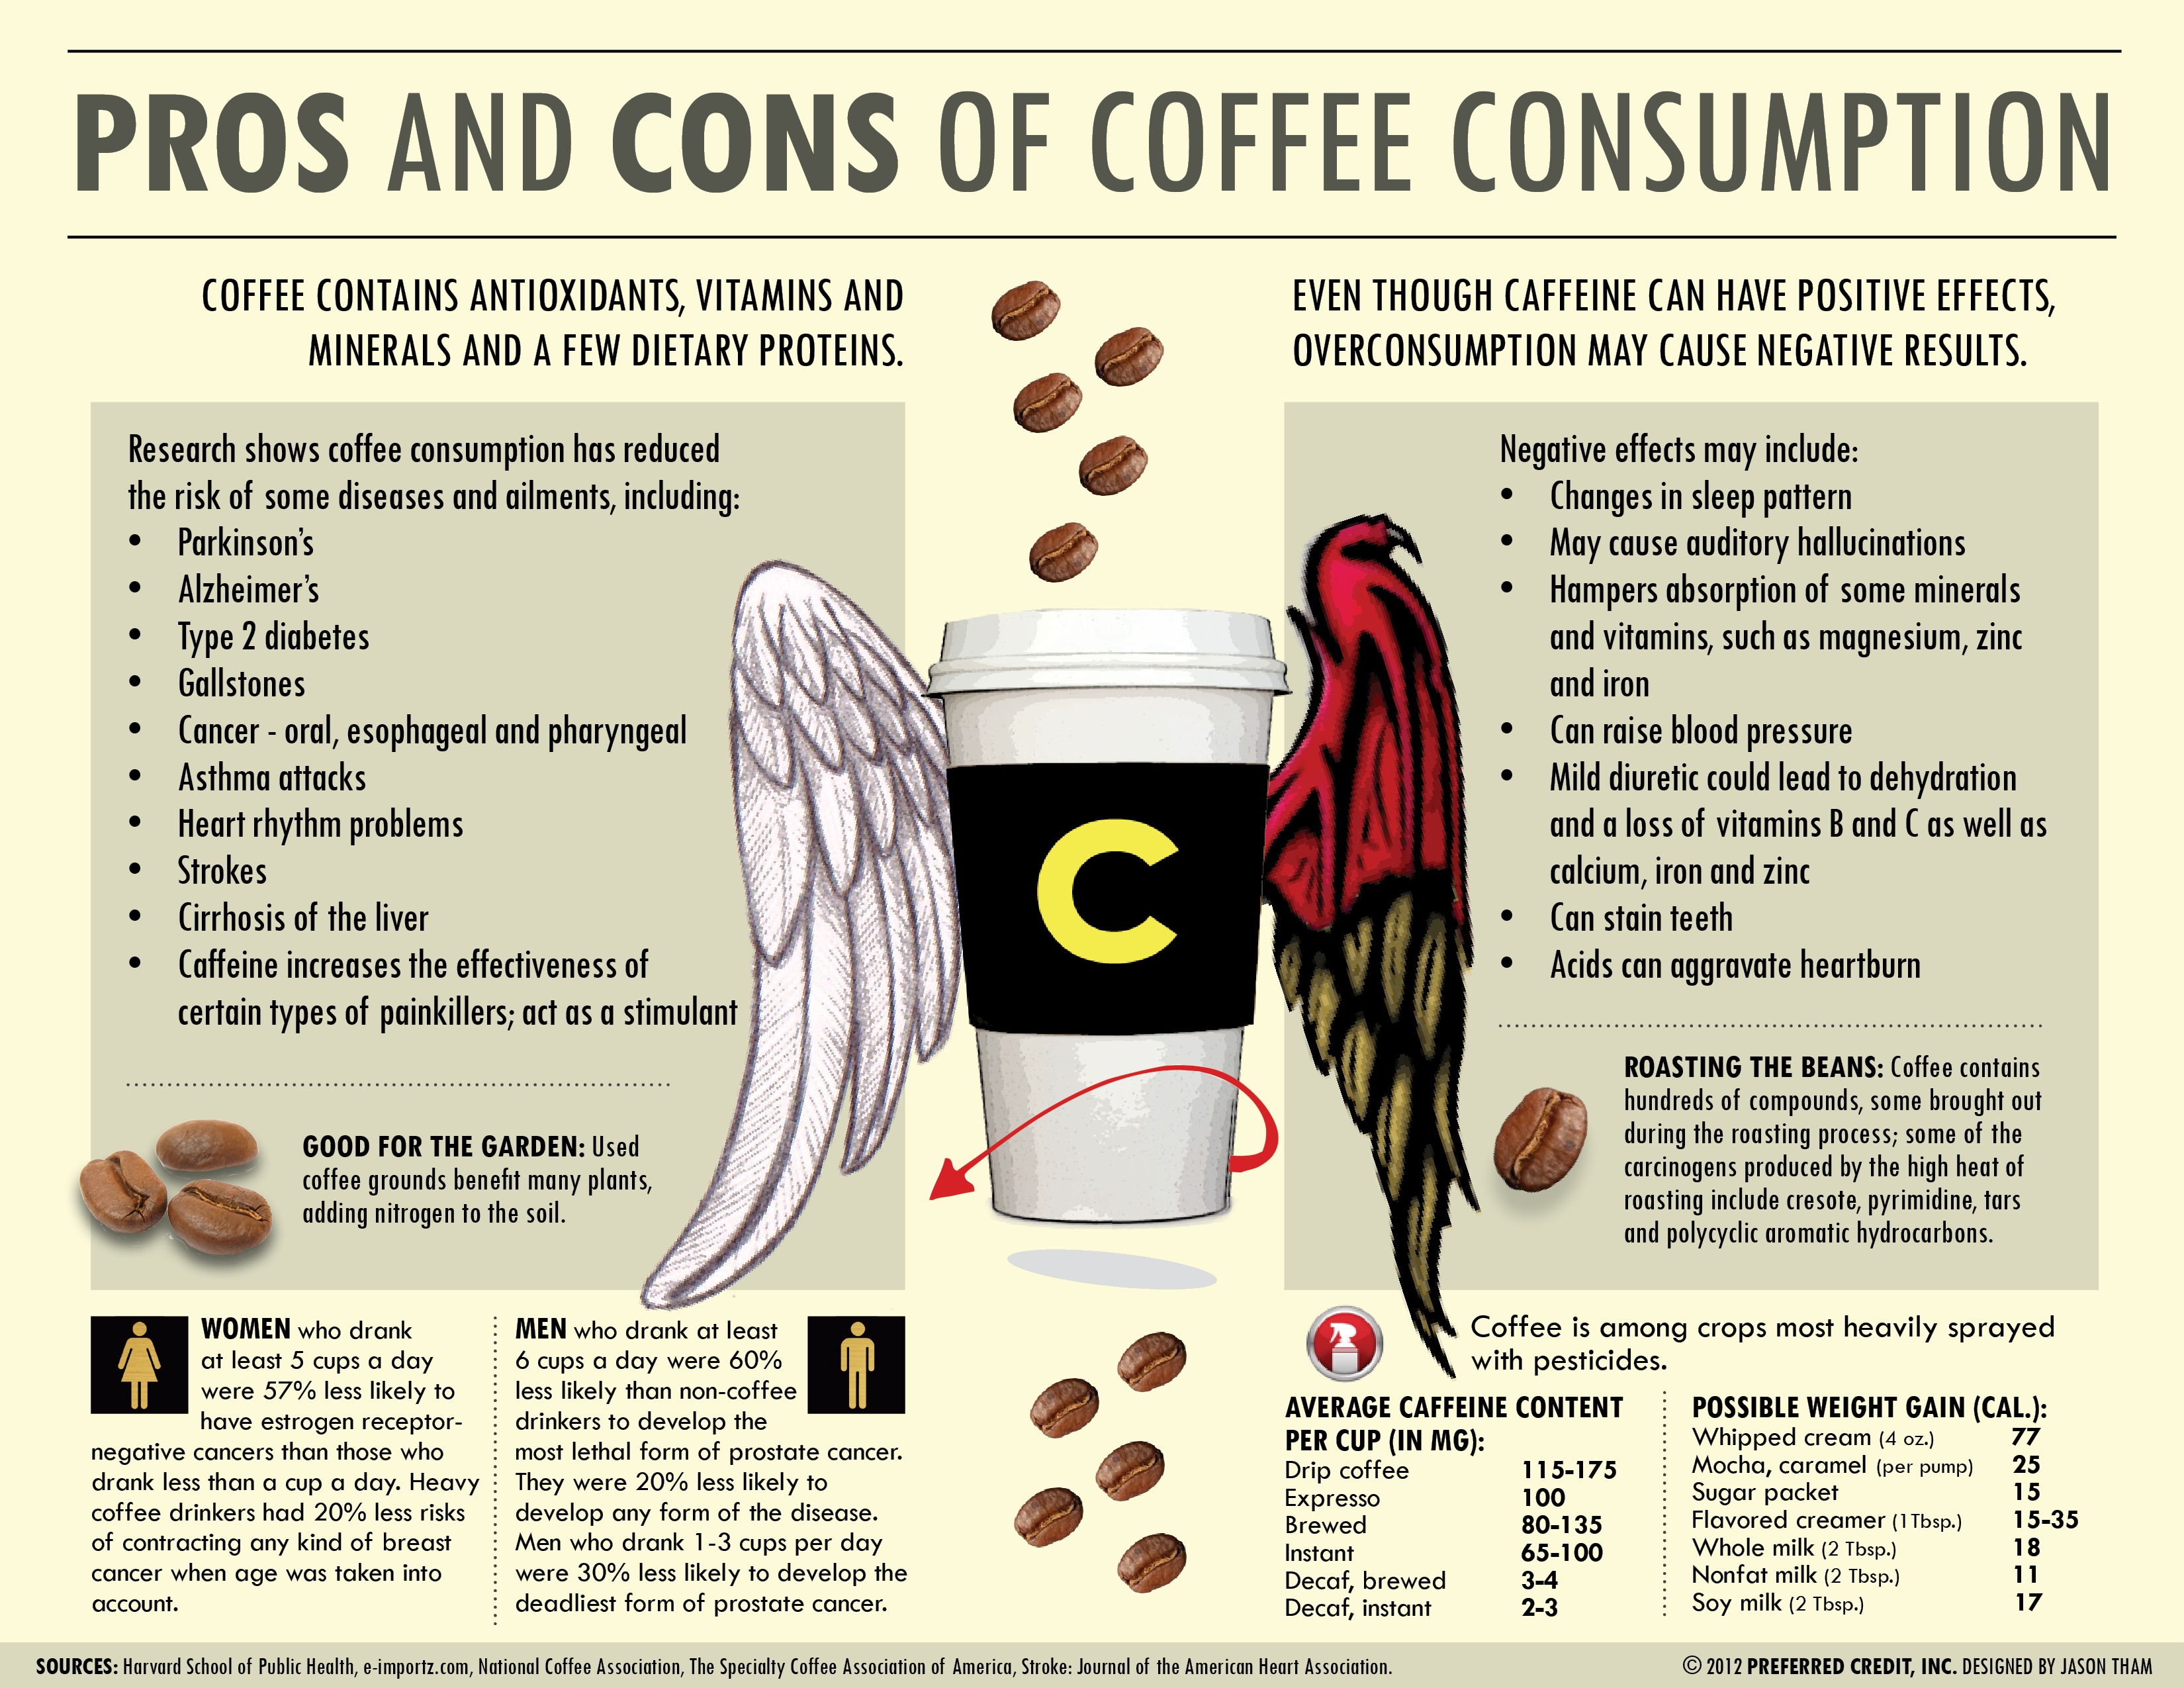 http://thebiznavigator.files.wordpress.com/2012/03/pros-and-cons-of-coffee-consumption-infographic.jpg